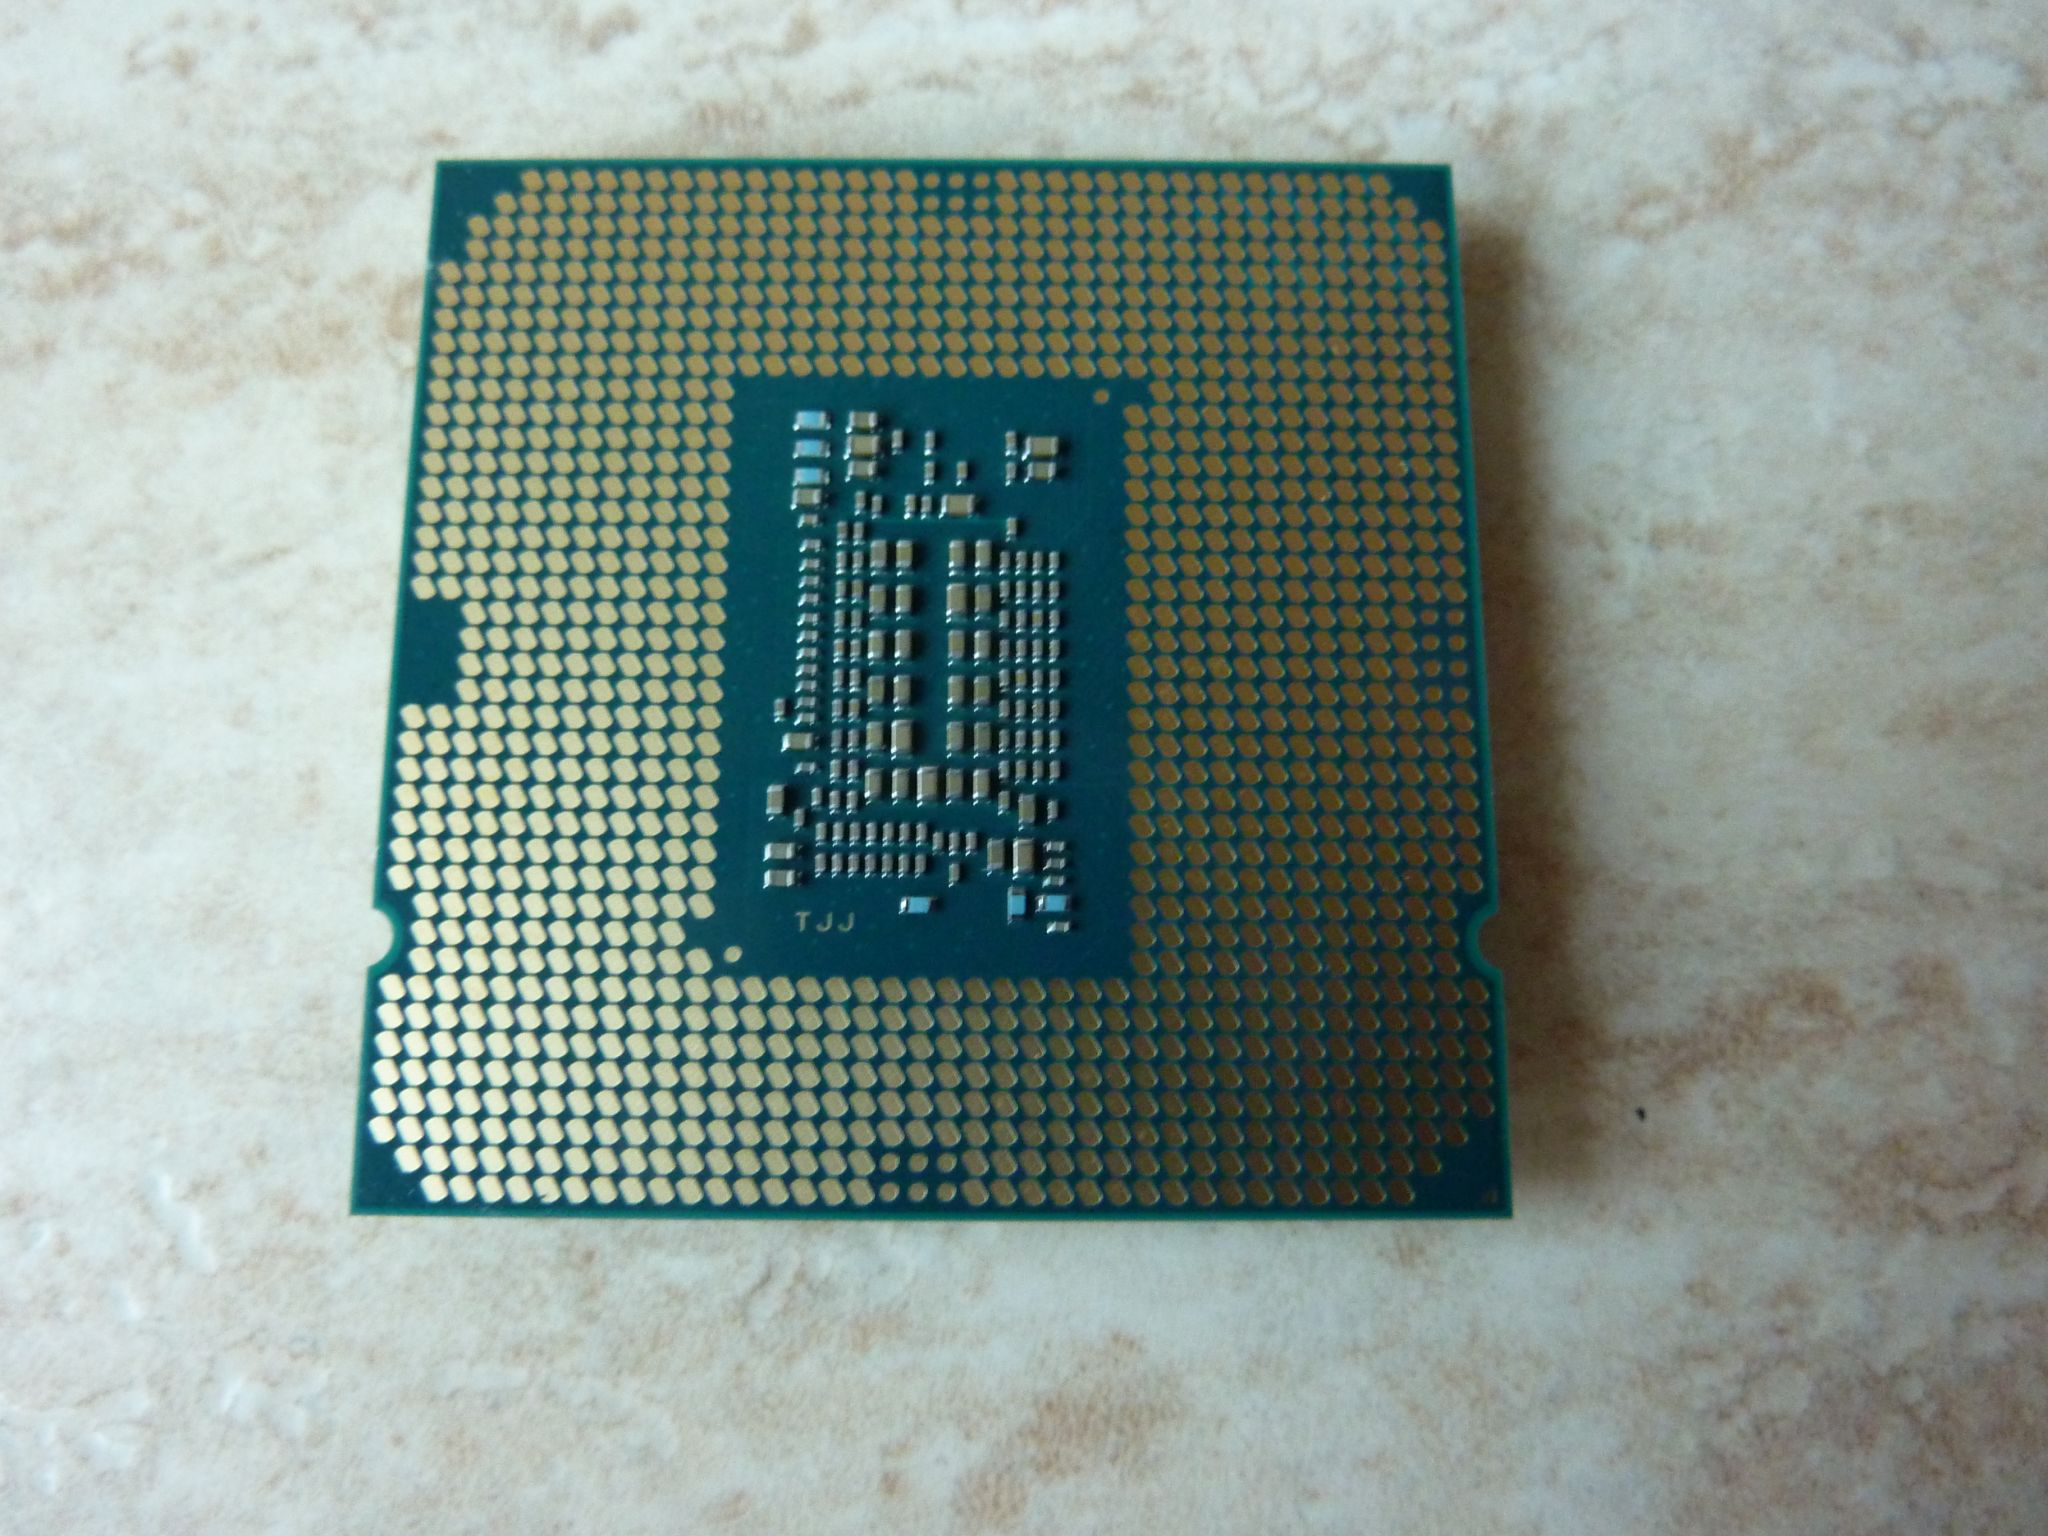 I5 10400f память. Core i5 10400f сокет. Процессор Intel i5 10400f. Intel Core i5 9500f сокет. Процессор Intel Core i5-10400f.